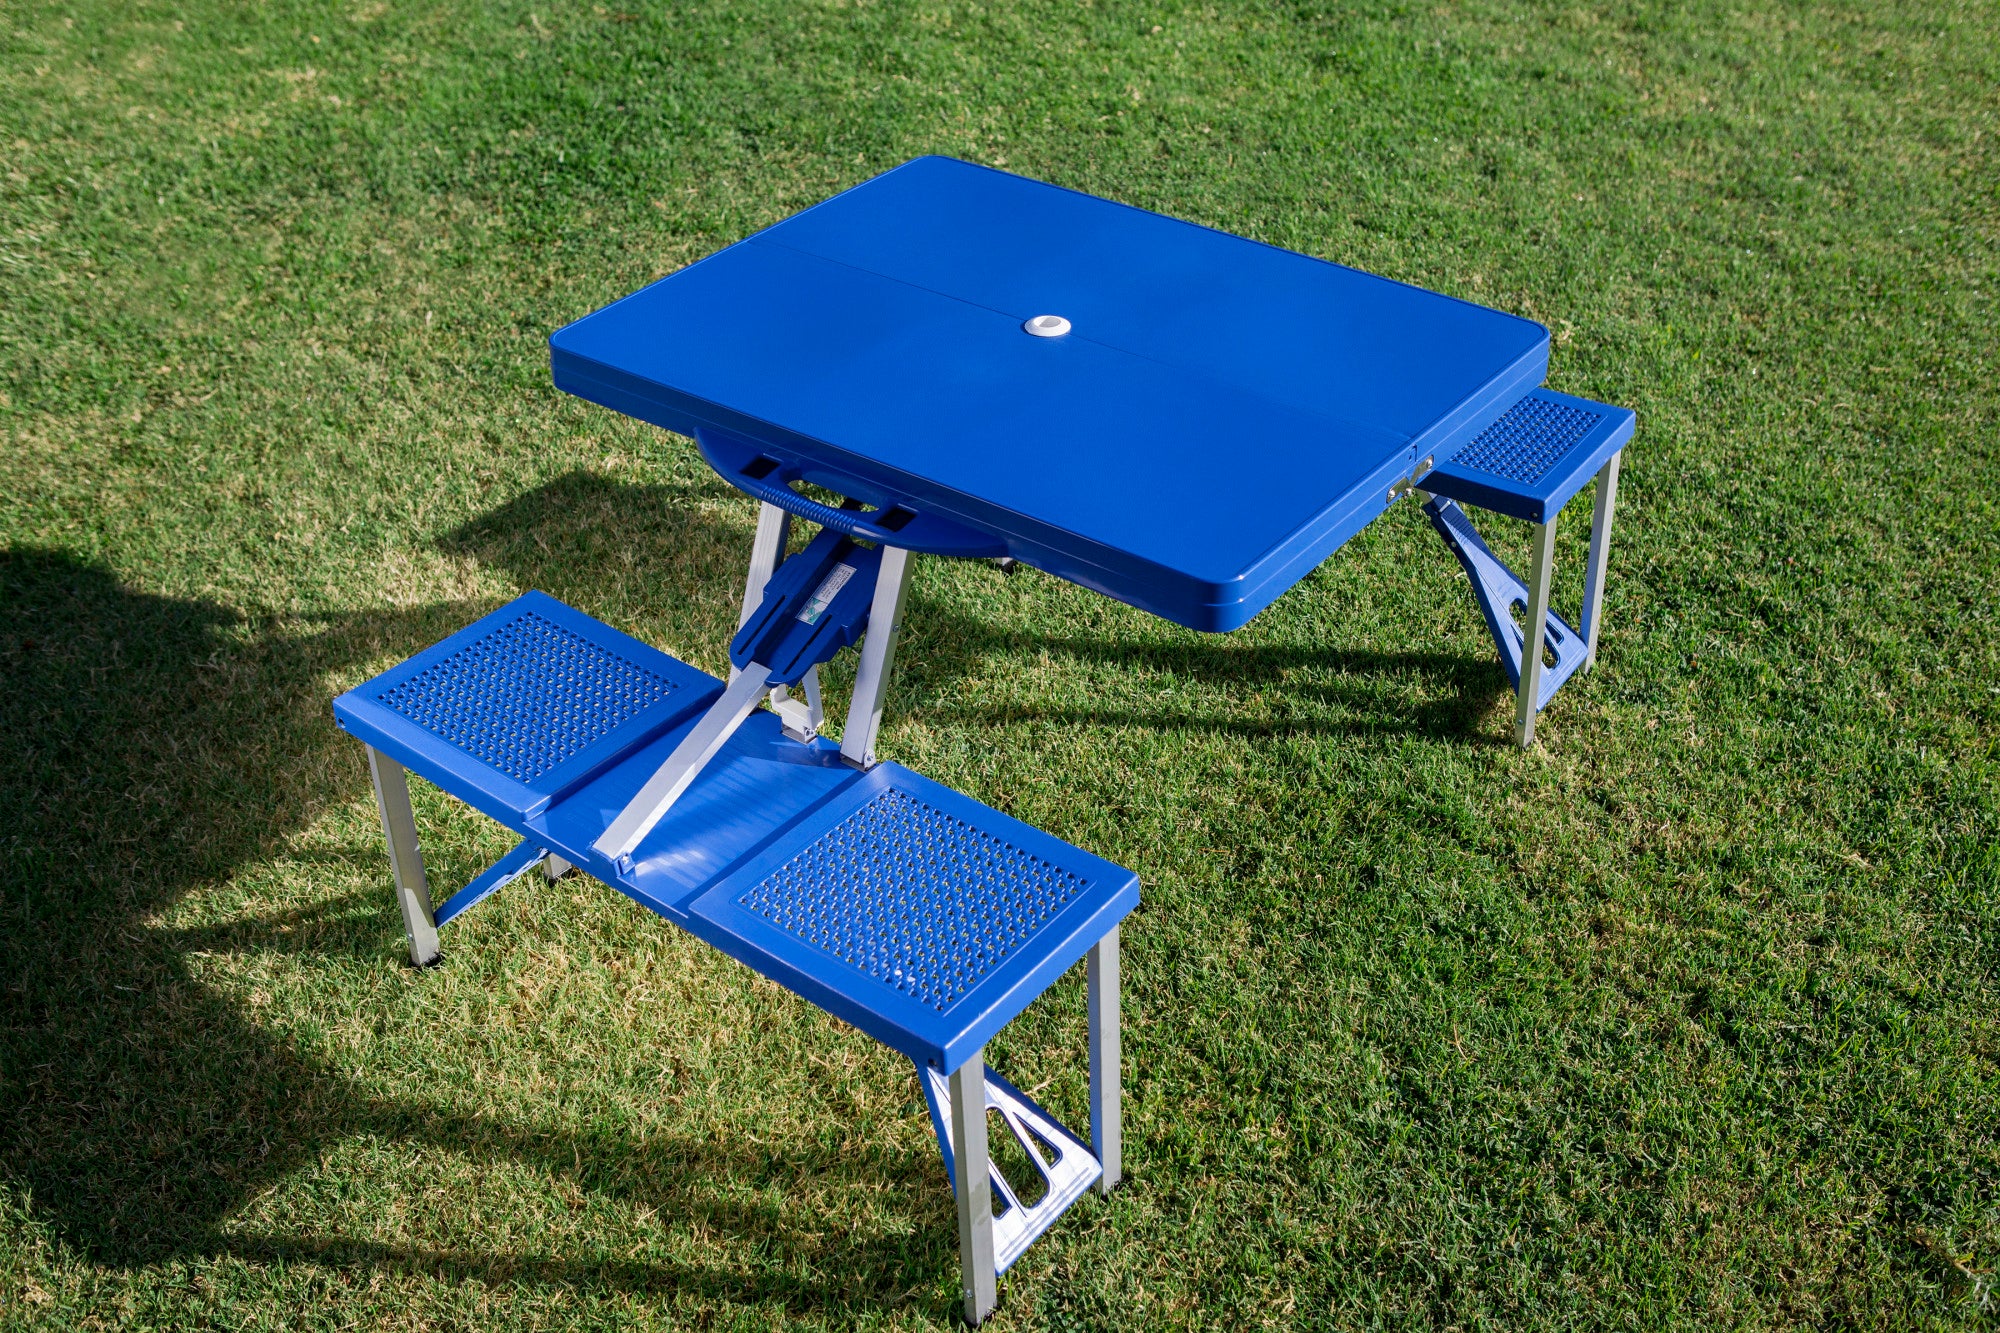 Milwaukee Brewers Baseball Diamond - Picnic Table Portable Folding Table with Seats